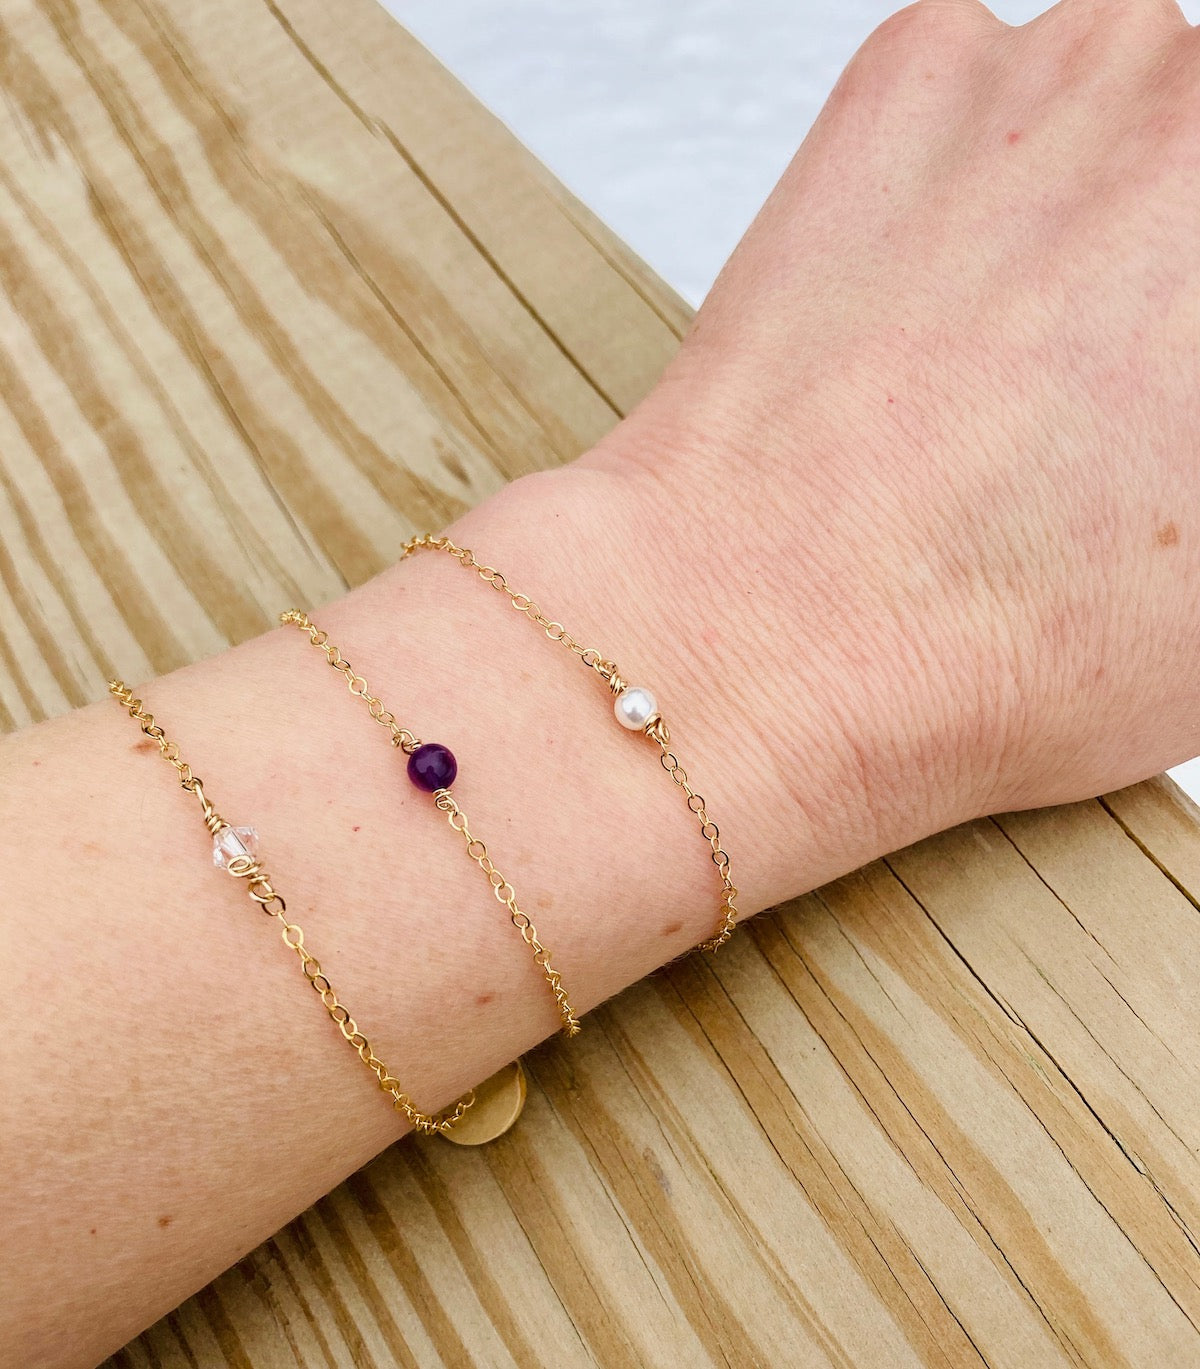 Birthstone layering bracelet